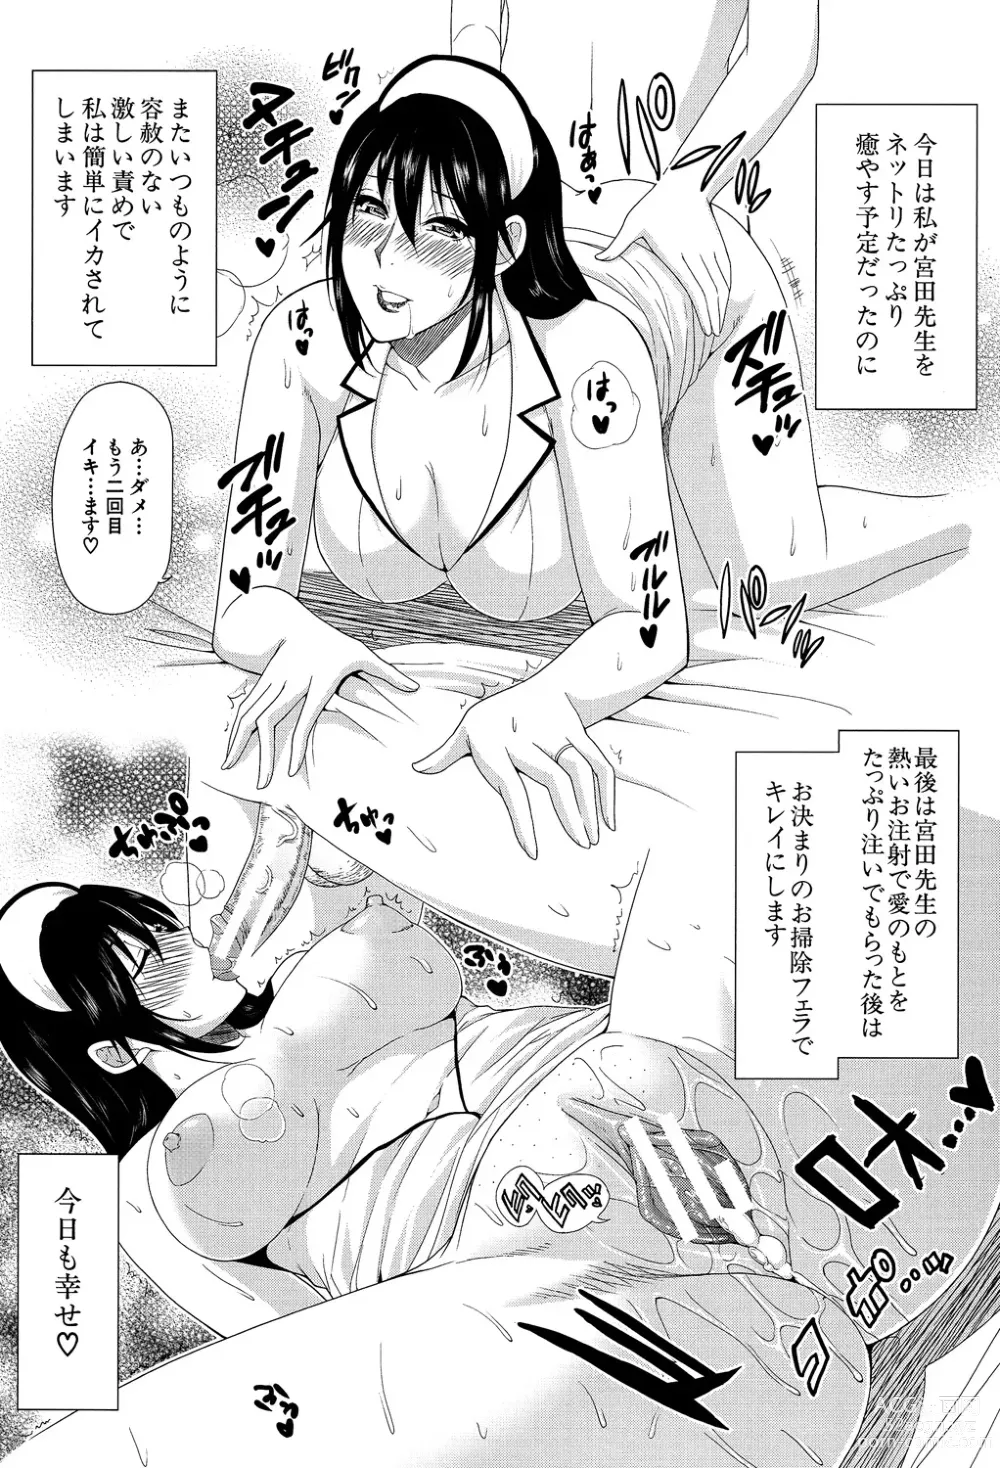 Page 212 of manga Hitokoishi, Tsuma